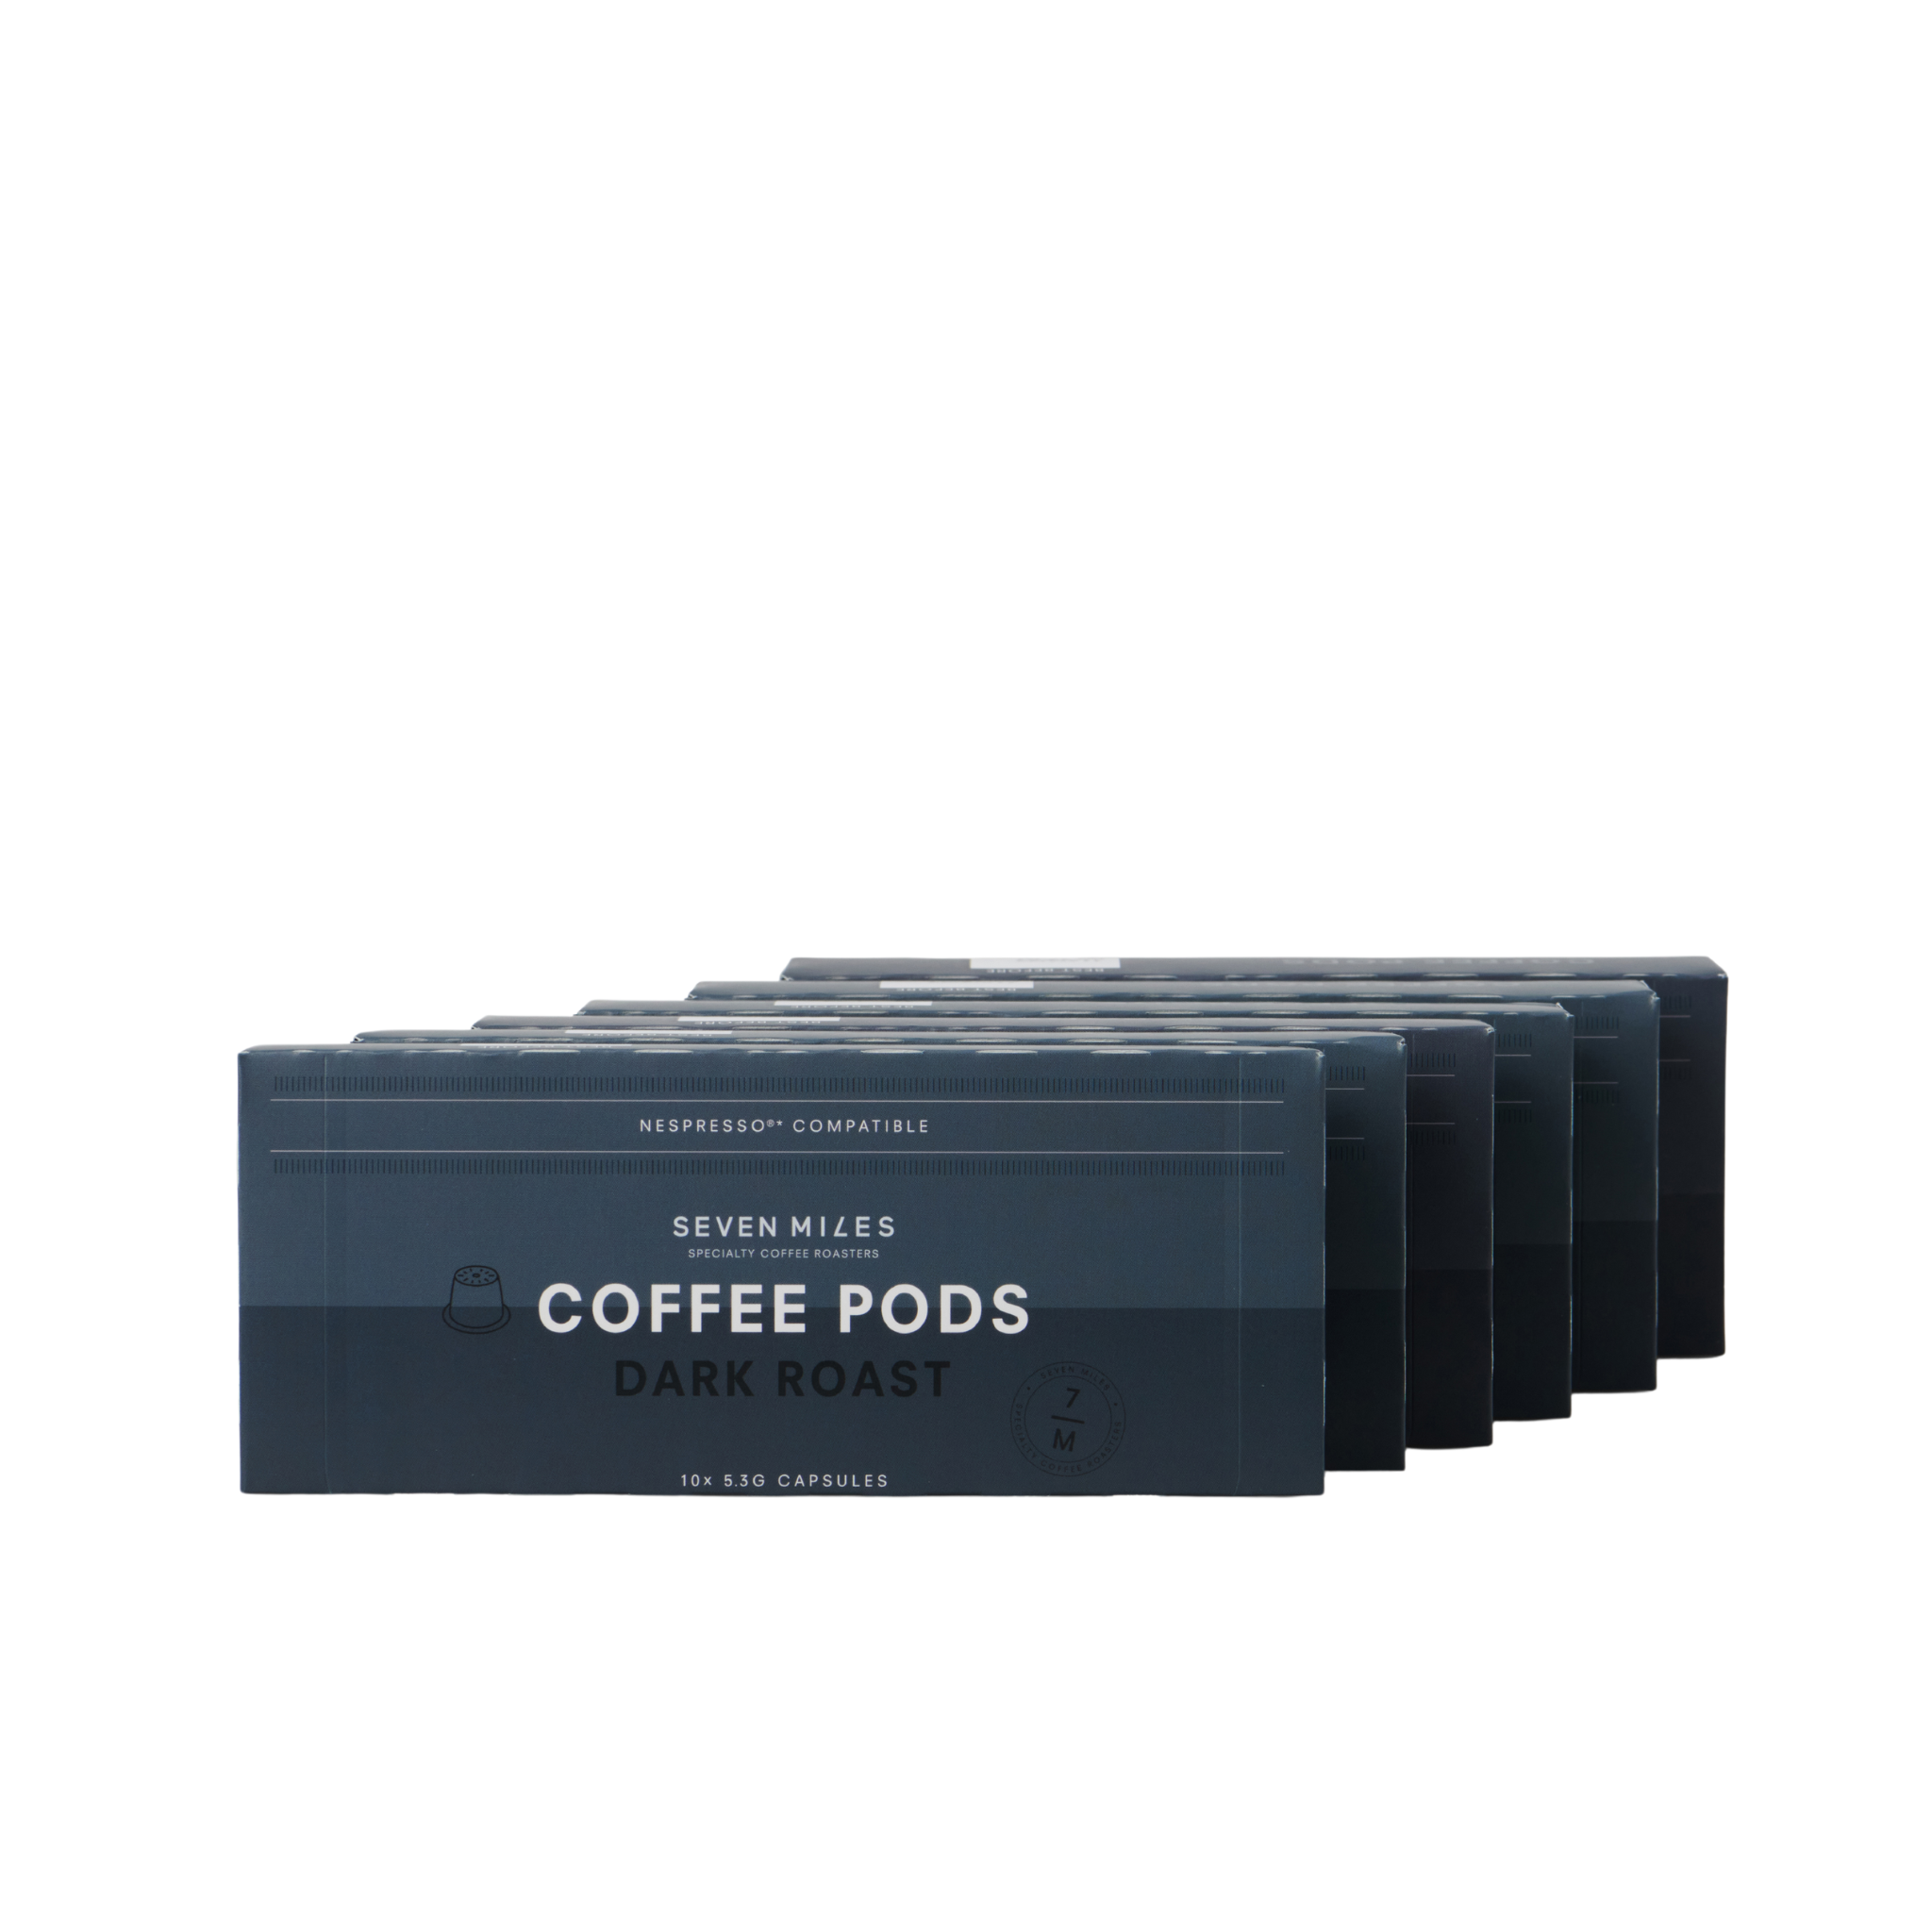 Choc Hazelnut Coffee - 10 Nespresso compatible coffee capsules – Coffee  Capsules Direct